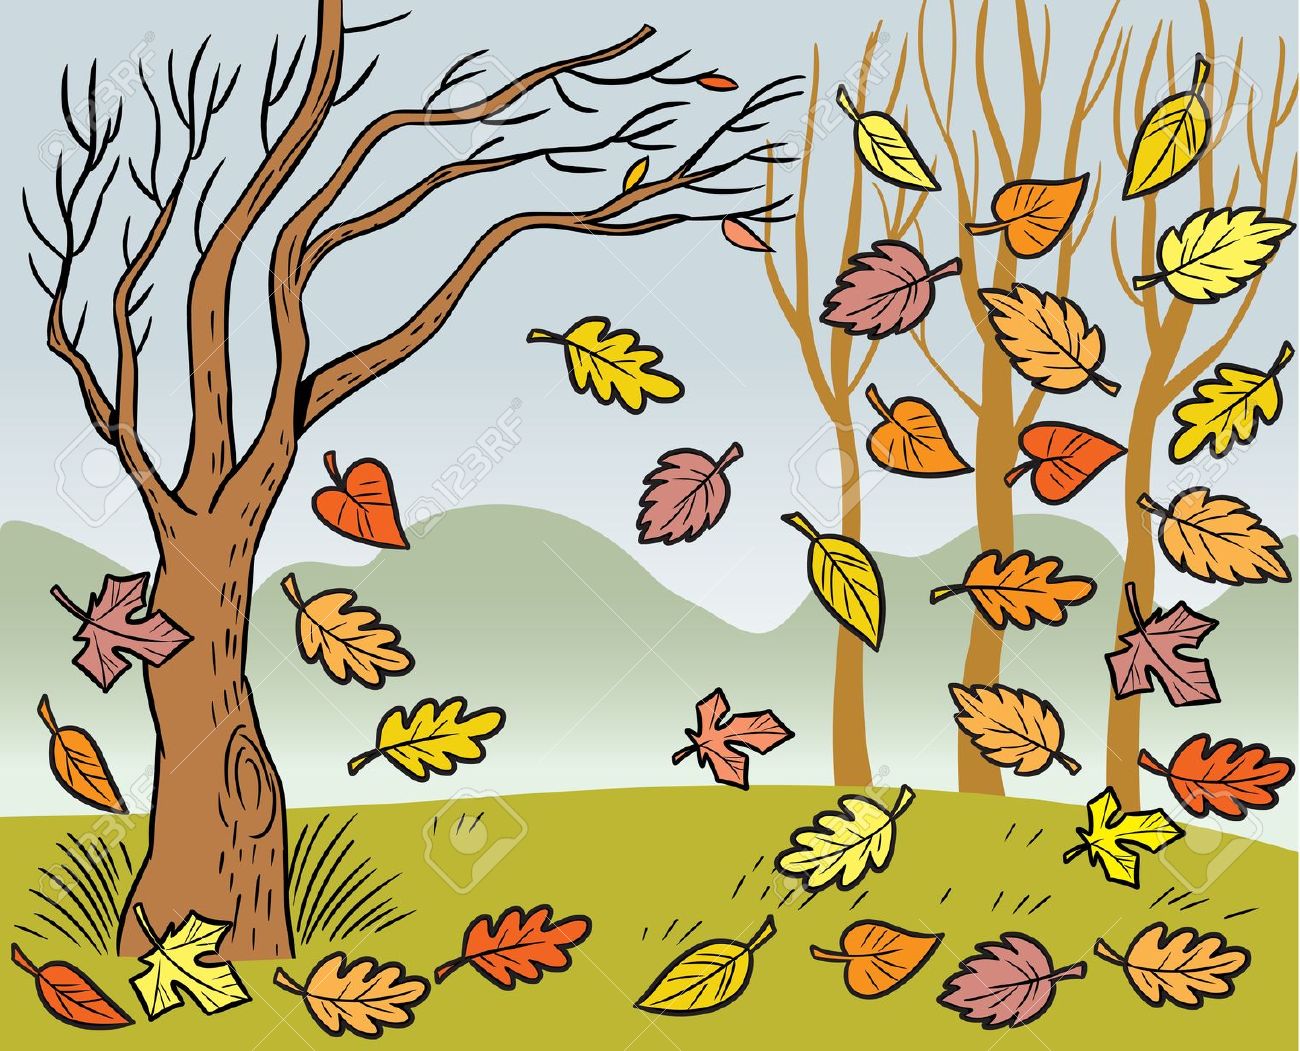 Autumn landscape clipart 20 free Cliparts | Download images on